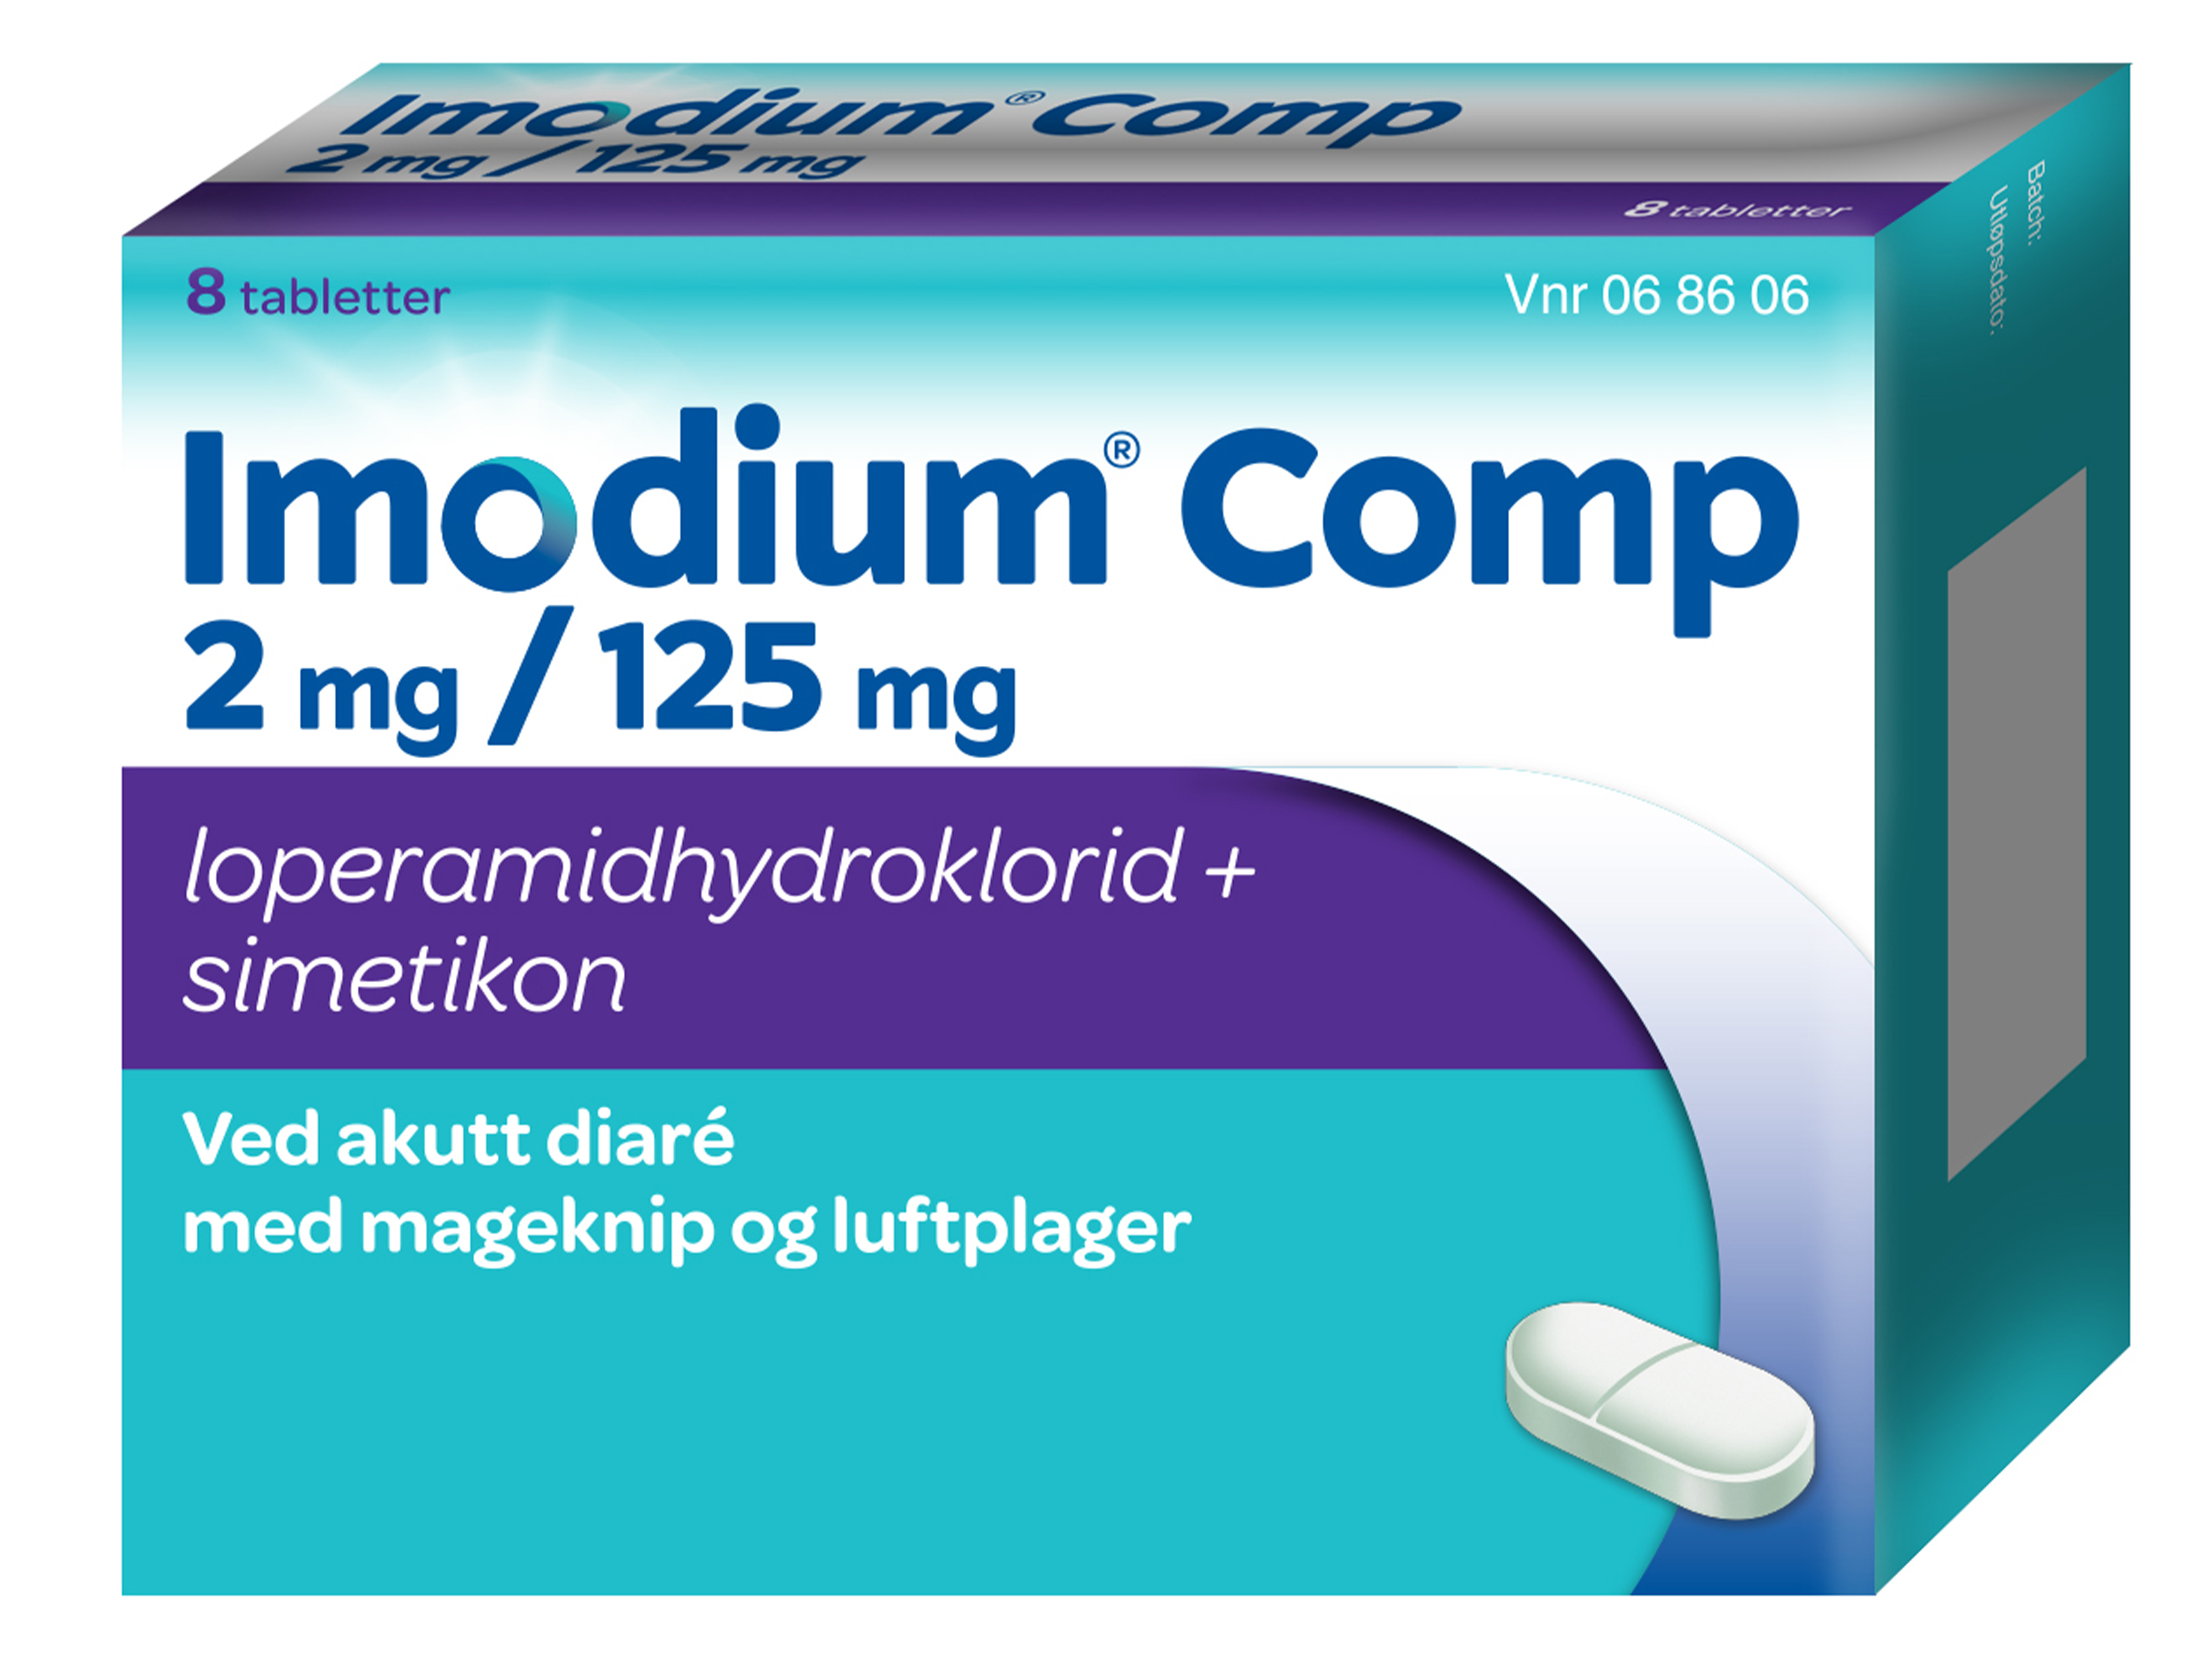 Imodium Comp tabletter 2mg/125mg, 8 stk. på brett